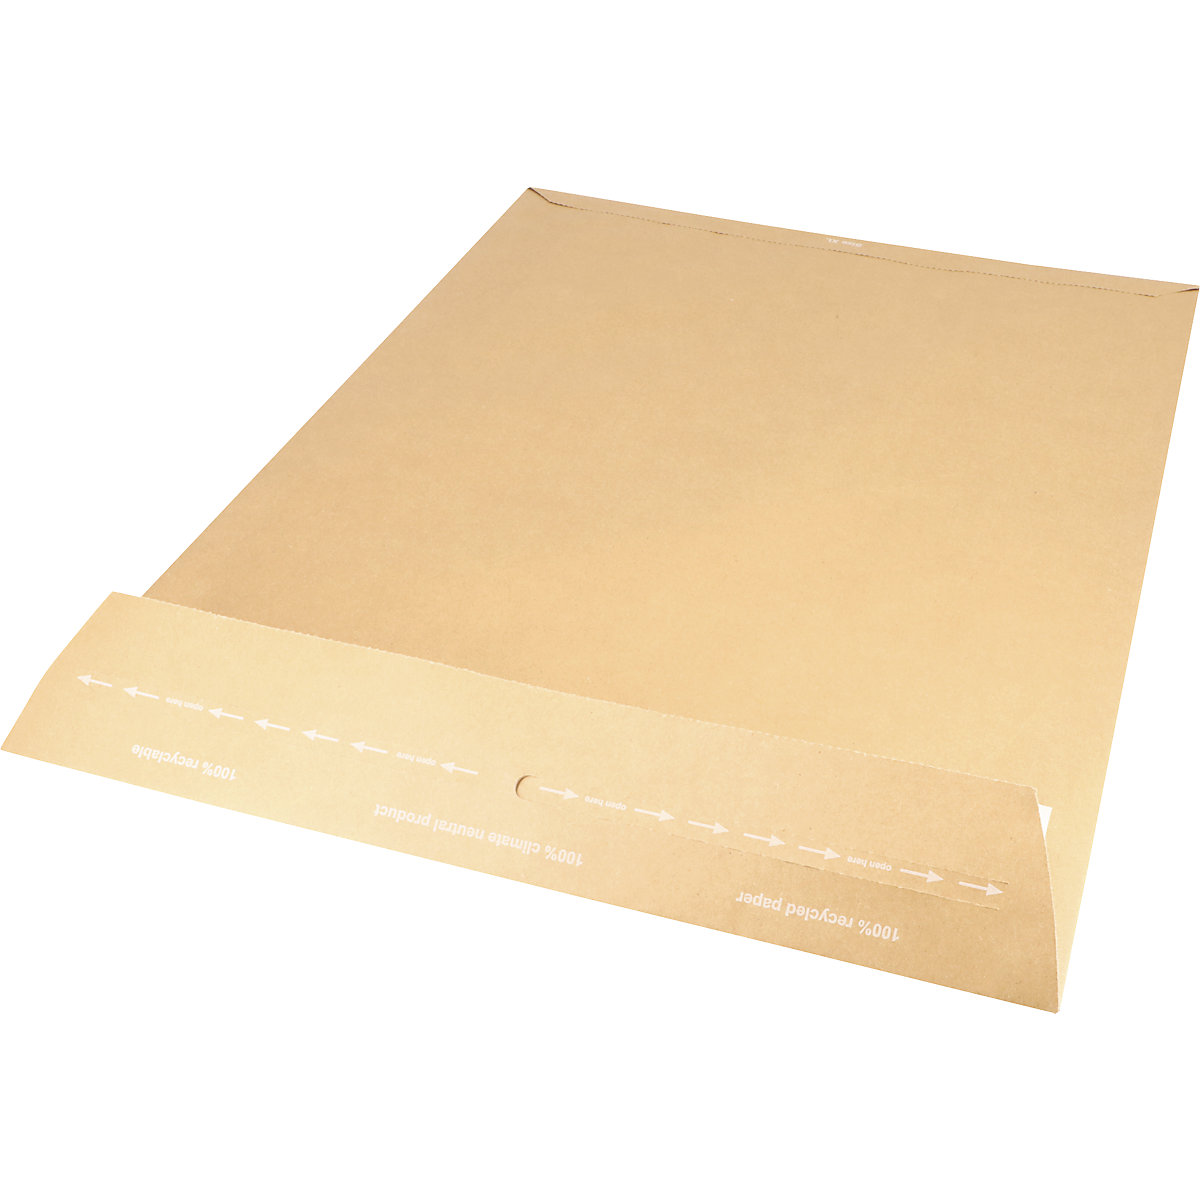 Versandtasche aus Papier E-Commerce terra, retourengeeignet, LxB 600 x 440 mm, VE 150 Stk, ab 10 VE-2